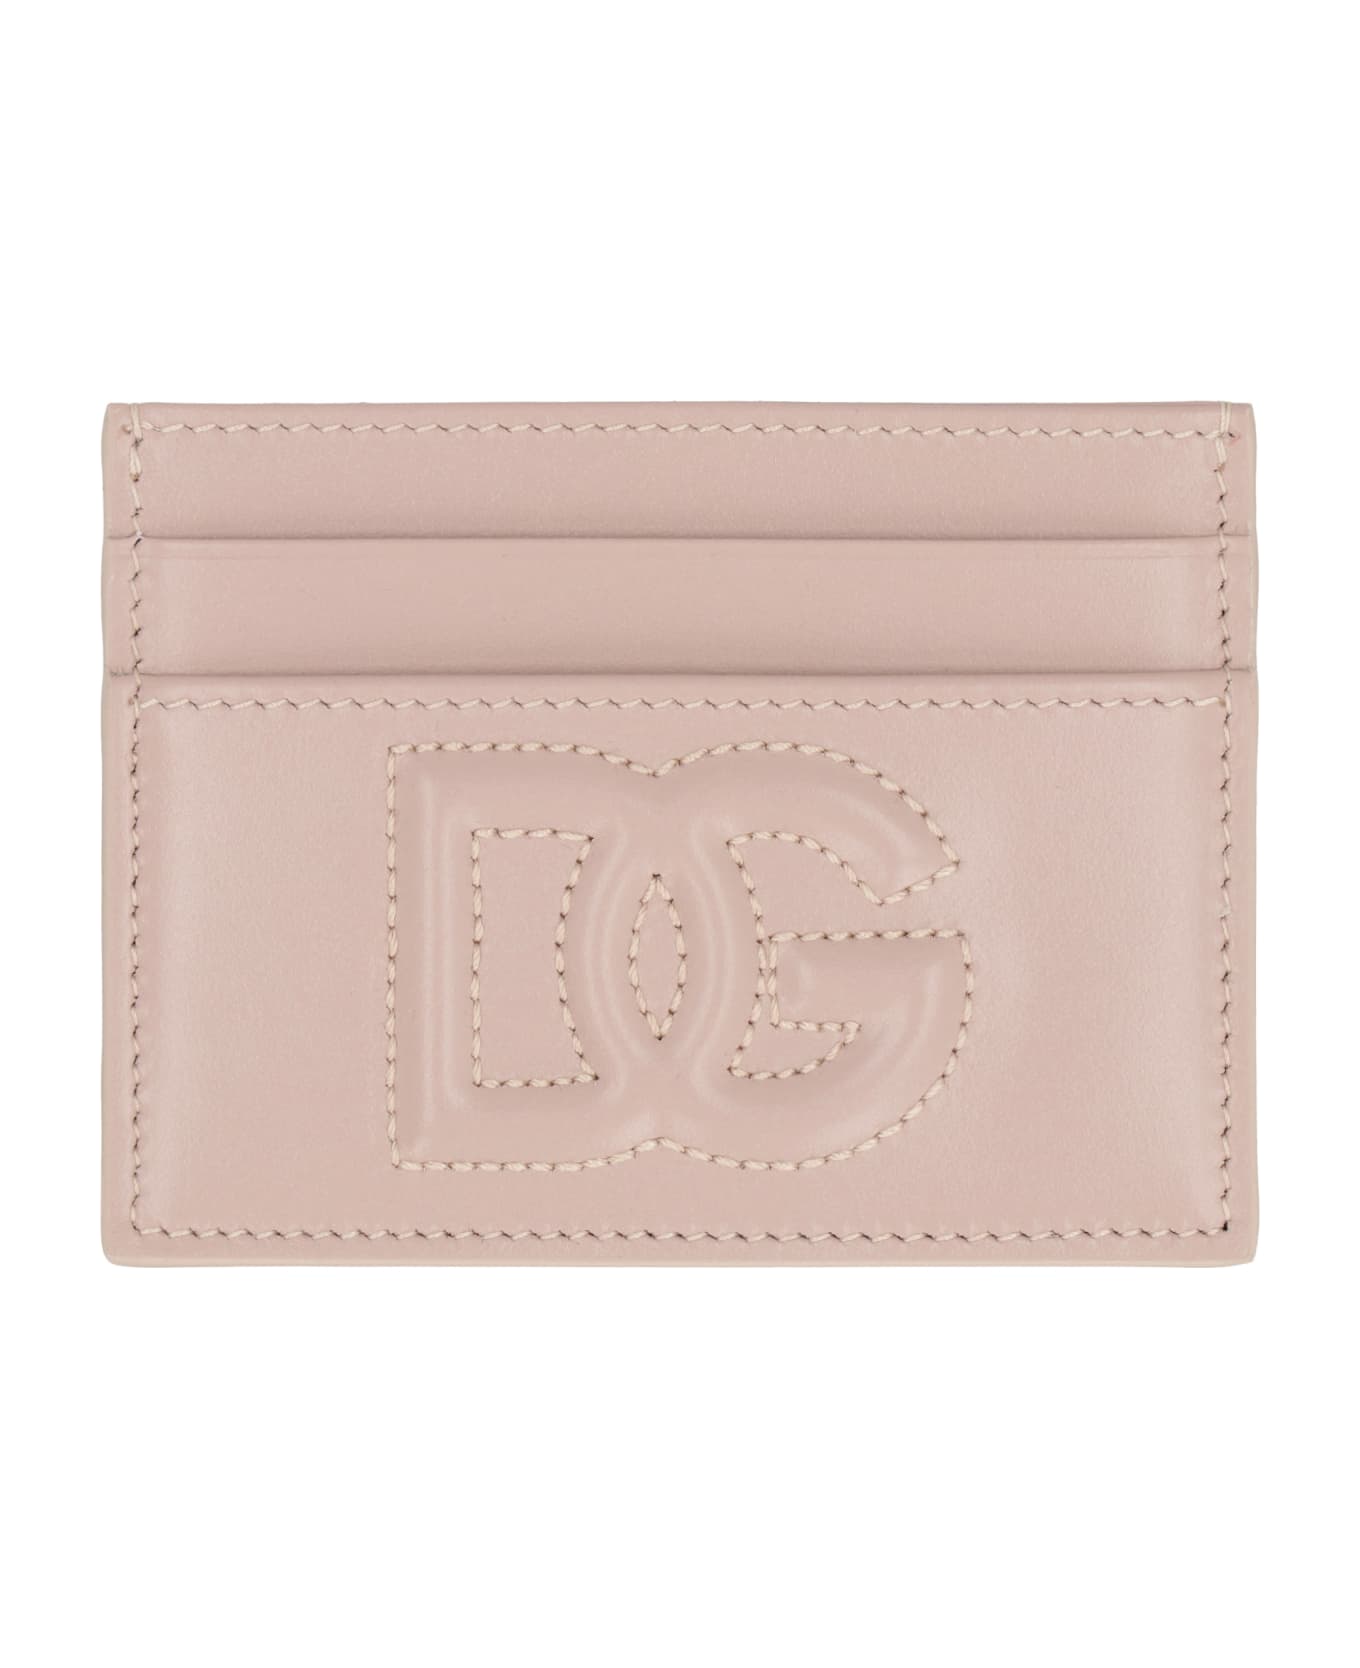 Dolce & Gabbana Logo Detail Leather Card Holder - Pale pink